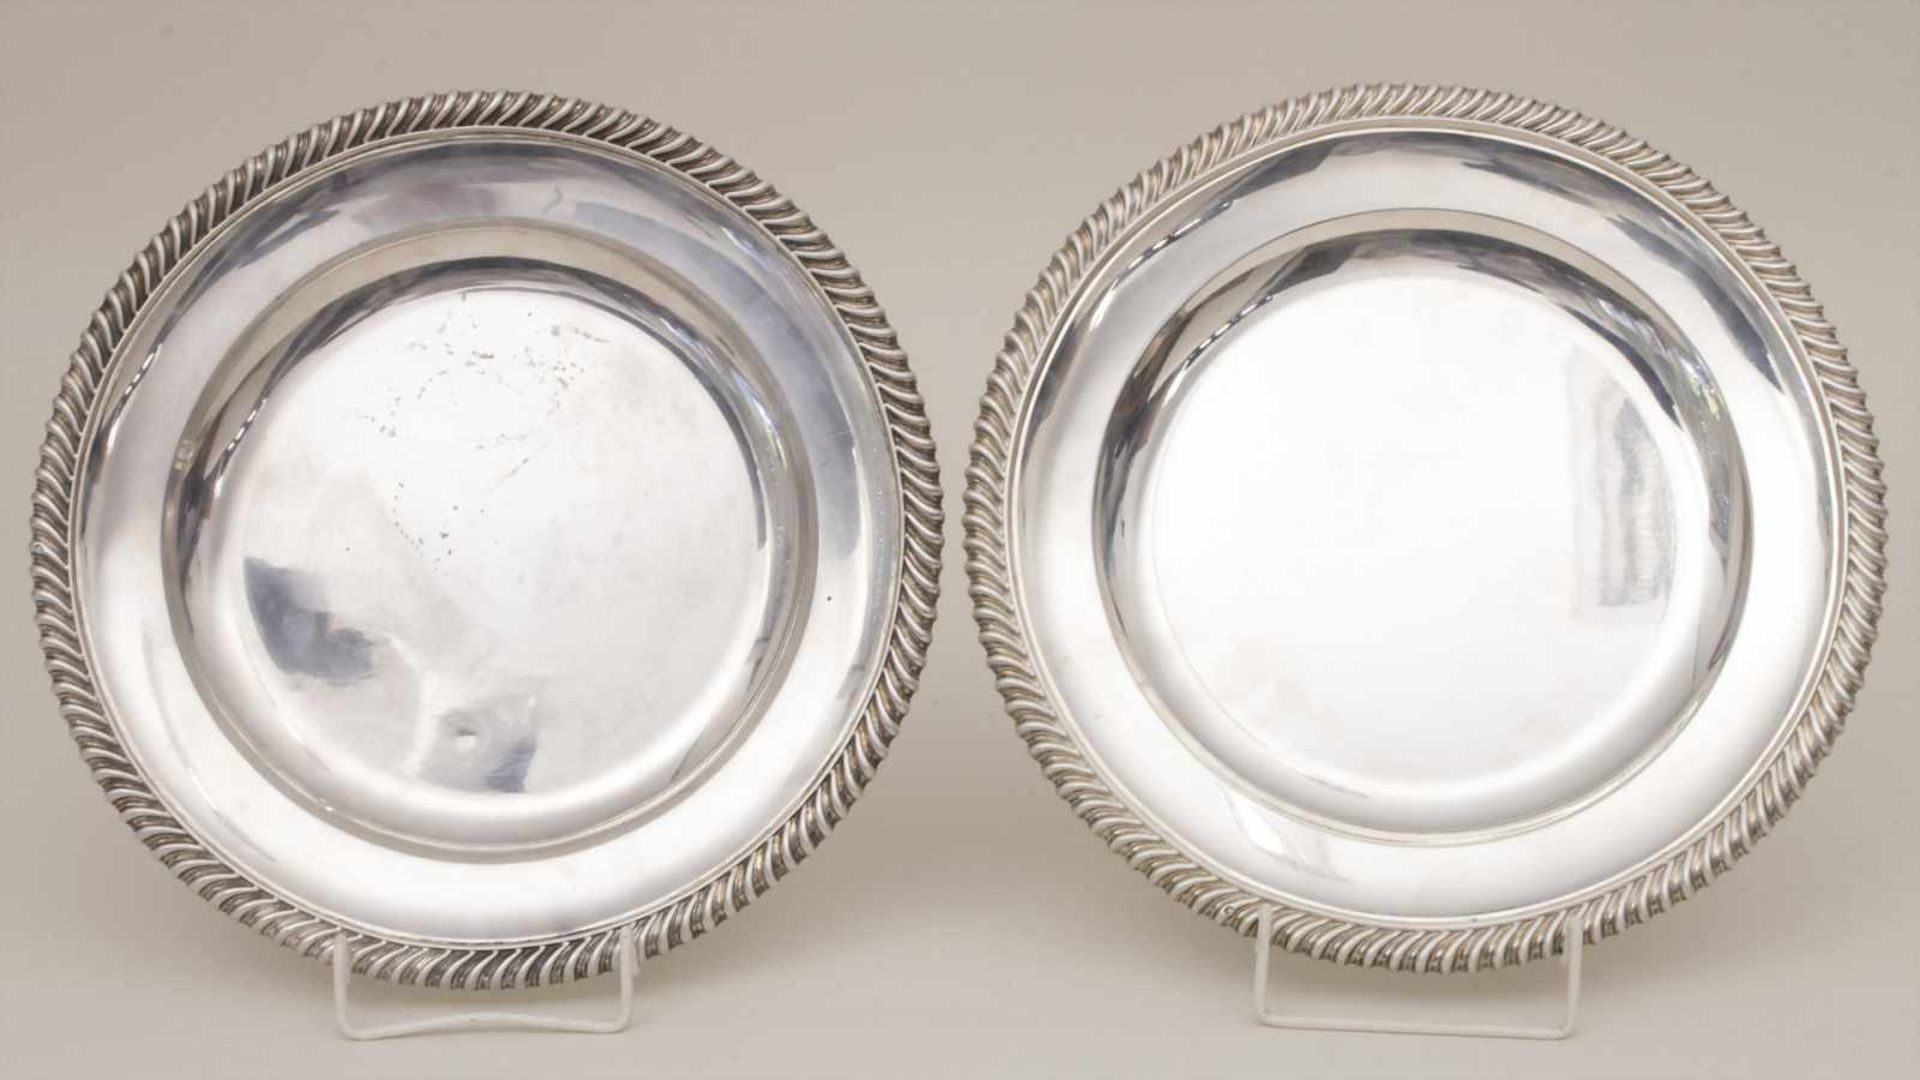 2 runde Platten / 2 silver plates, Paris, nach 1839Material: Silber 950,Punzierung: Meistermarke ??,